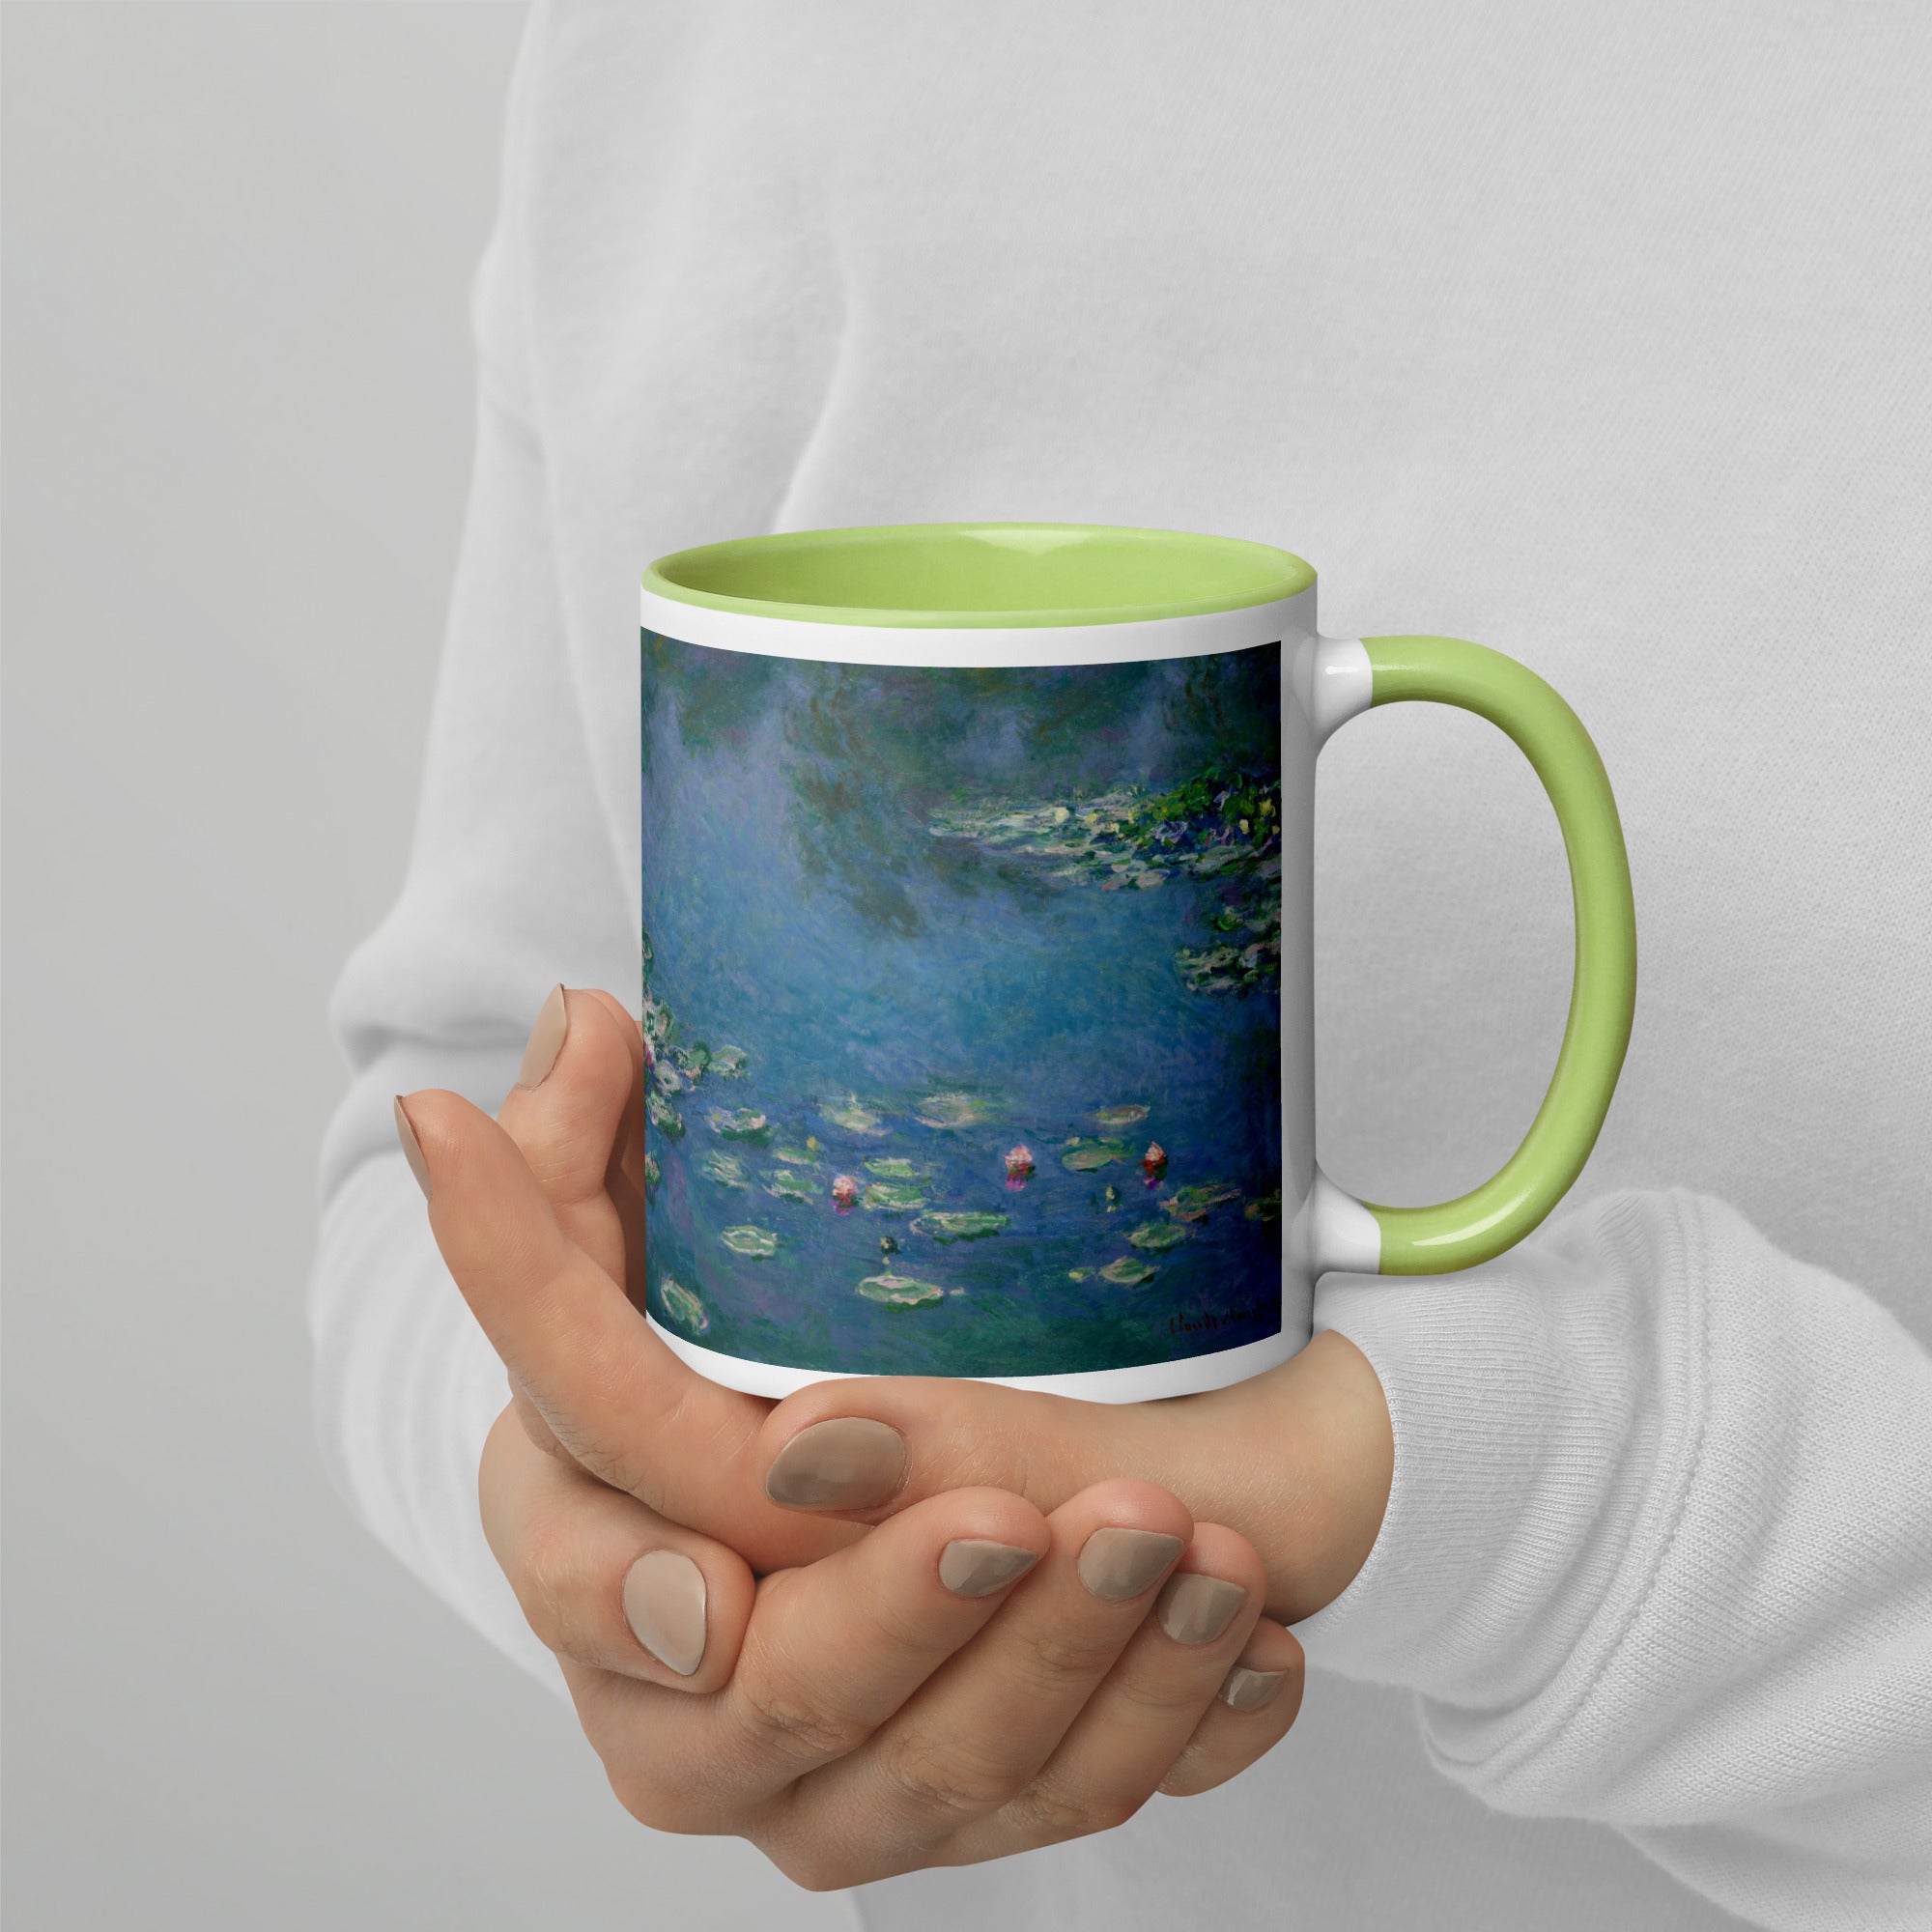 Claude Monet 'Water Lilies' Famous Painting Ceramic Mug | Premium Art Mug